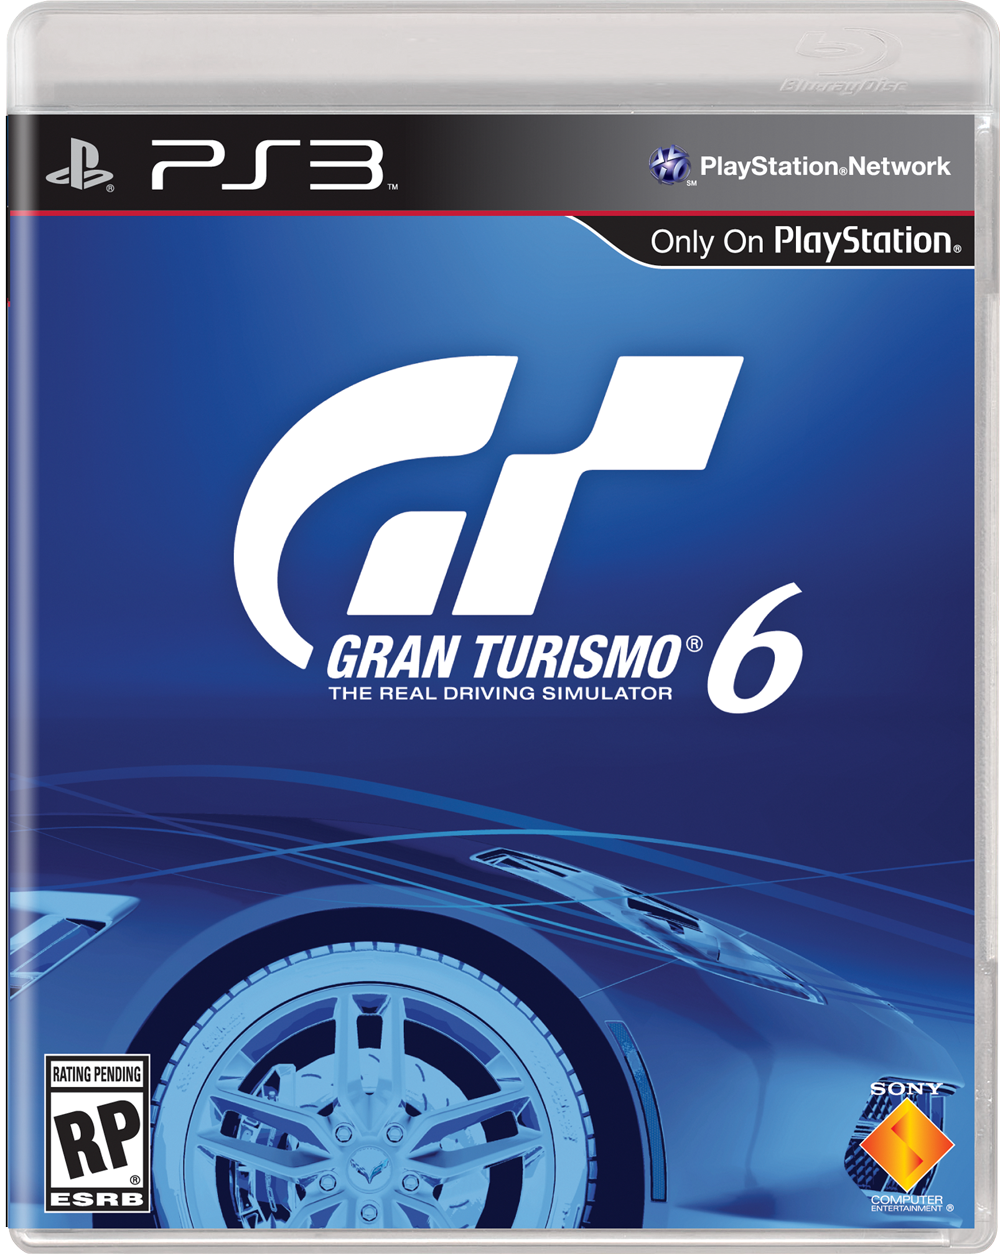 Gran Turismo 6 “80% Complete”, Gran Turismo 7 Coming to PS4 in “A